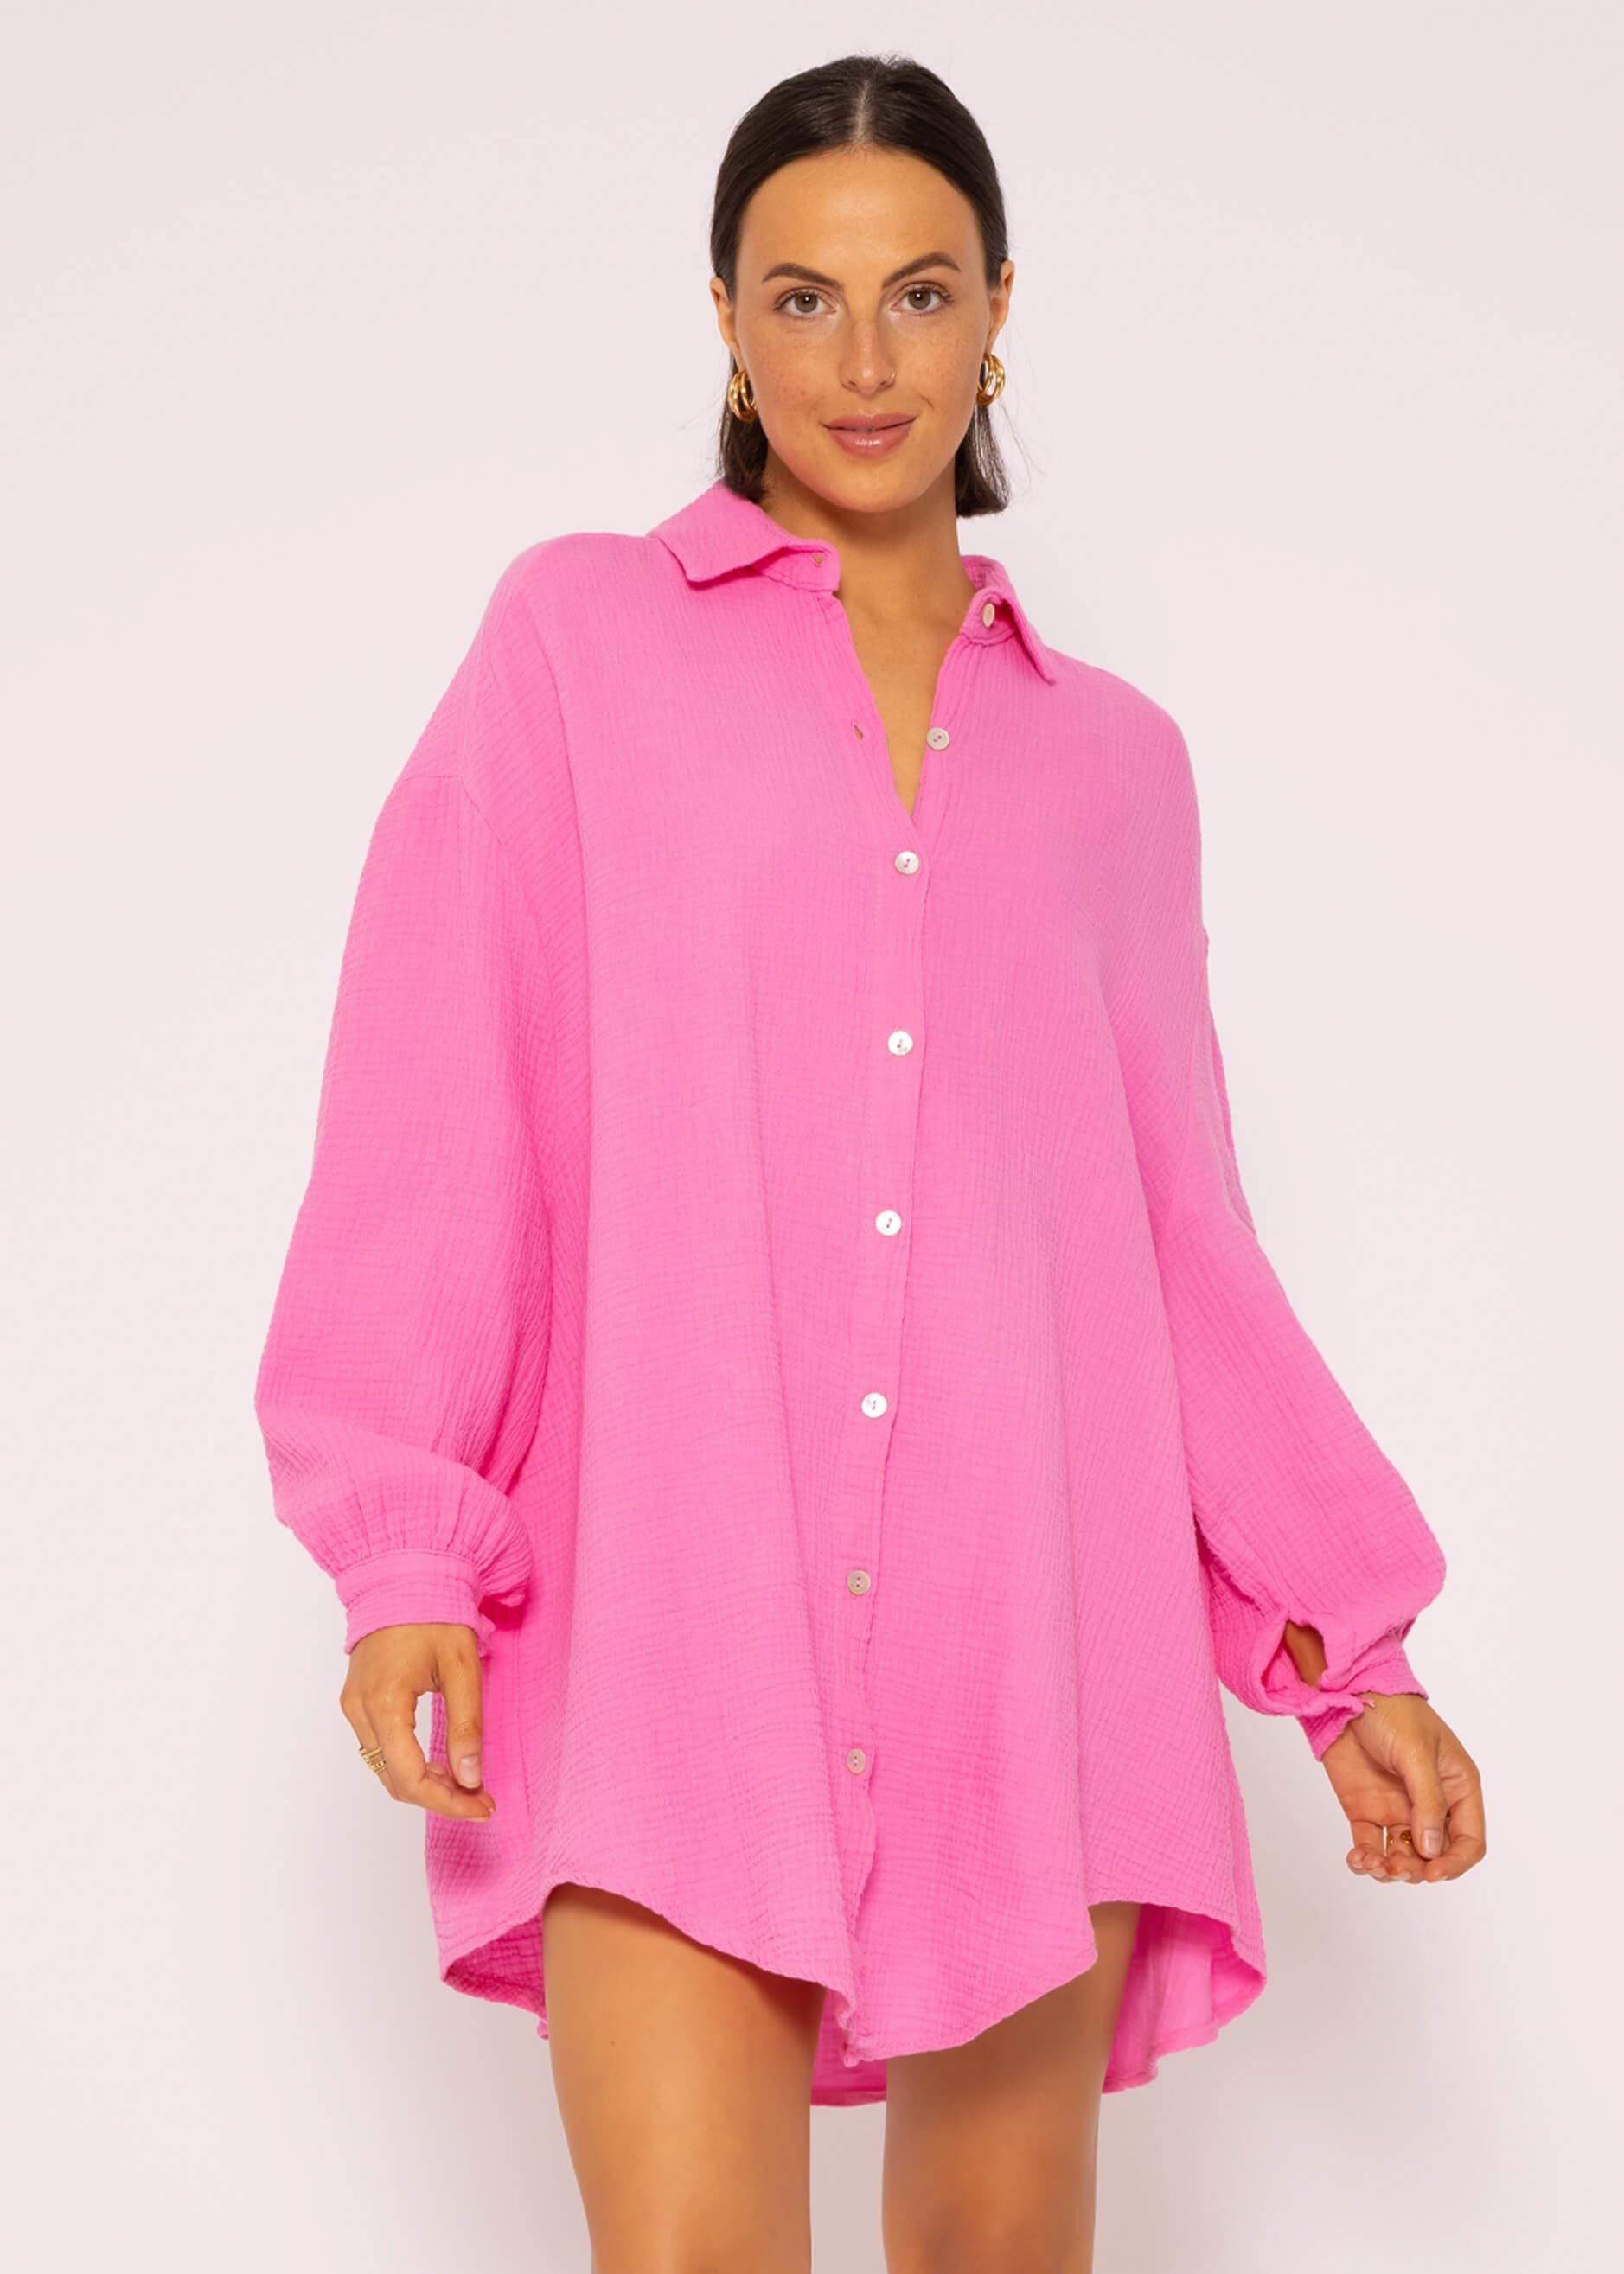 SASSYCLASSY Longbluse Oversize Musselin Bluse Damen Langarm Hemdbluse lang aus Baumwolle mit V-Ausschnitt, One Size (Gr. 36-48) Pink